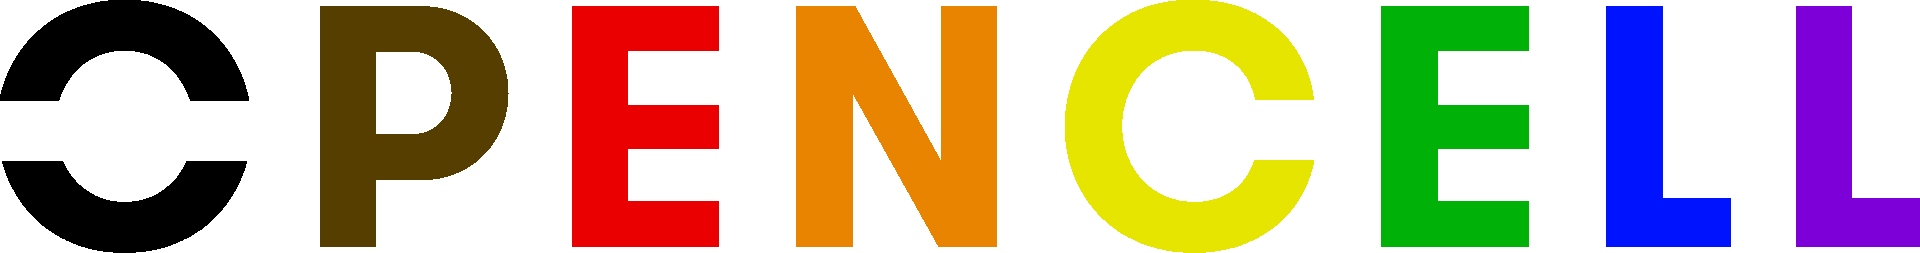 Opencell-logo